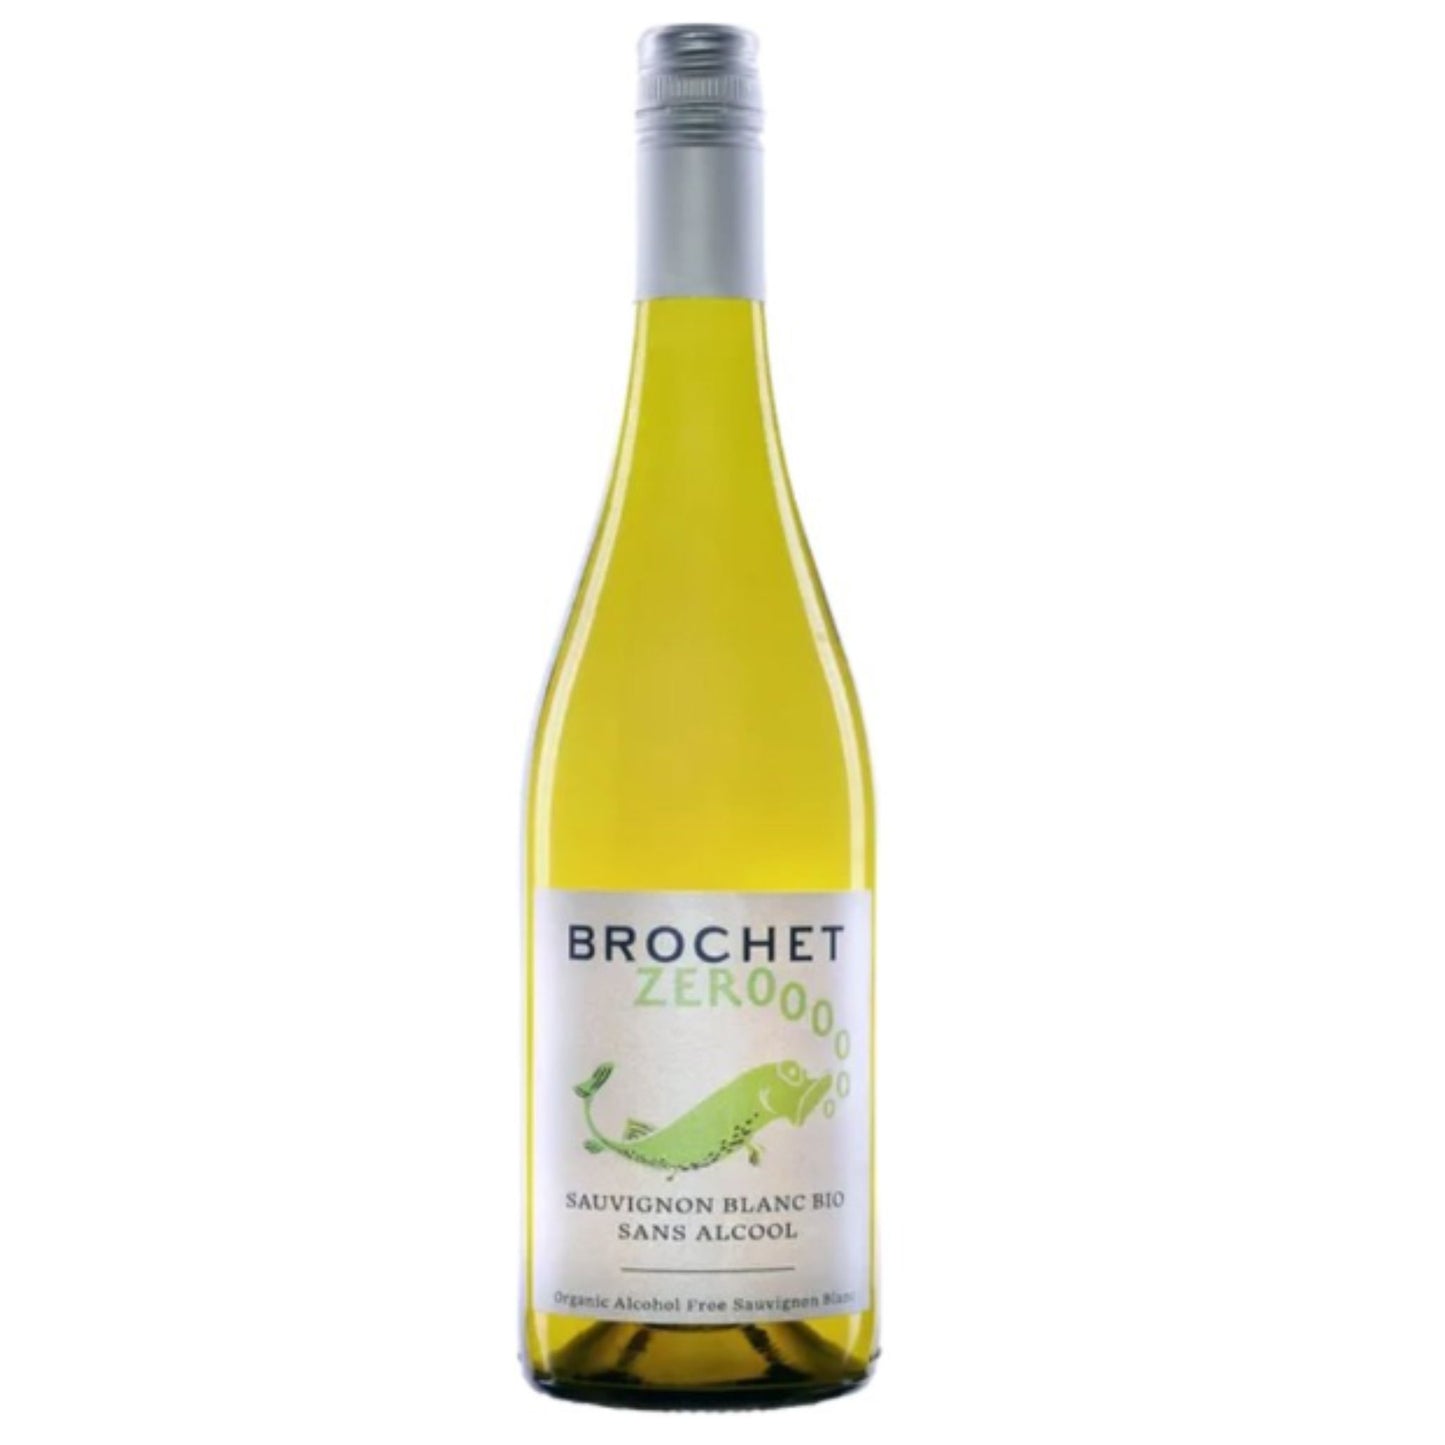 Brochet Zero Organic Sauvignon Blanc non-alcoholic wine is now available at Knyota Drinks in Ottawa.